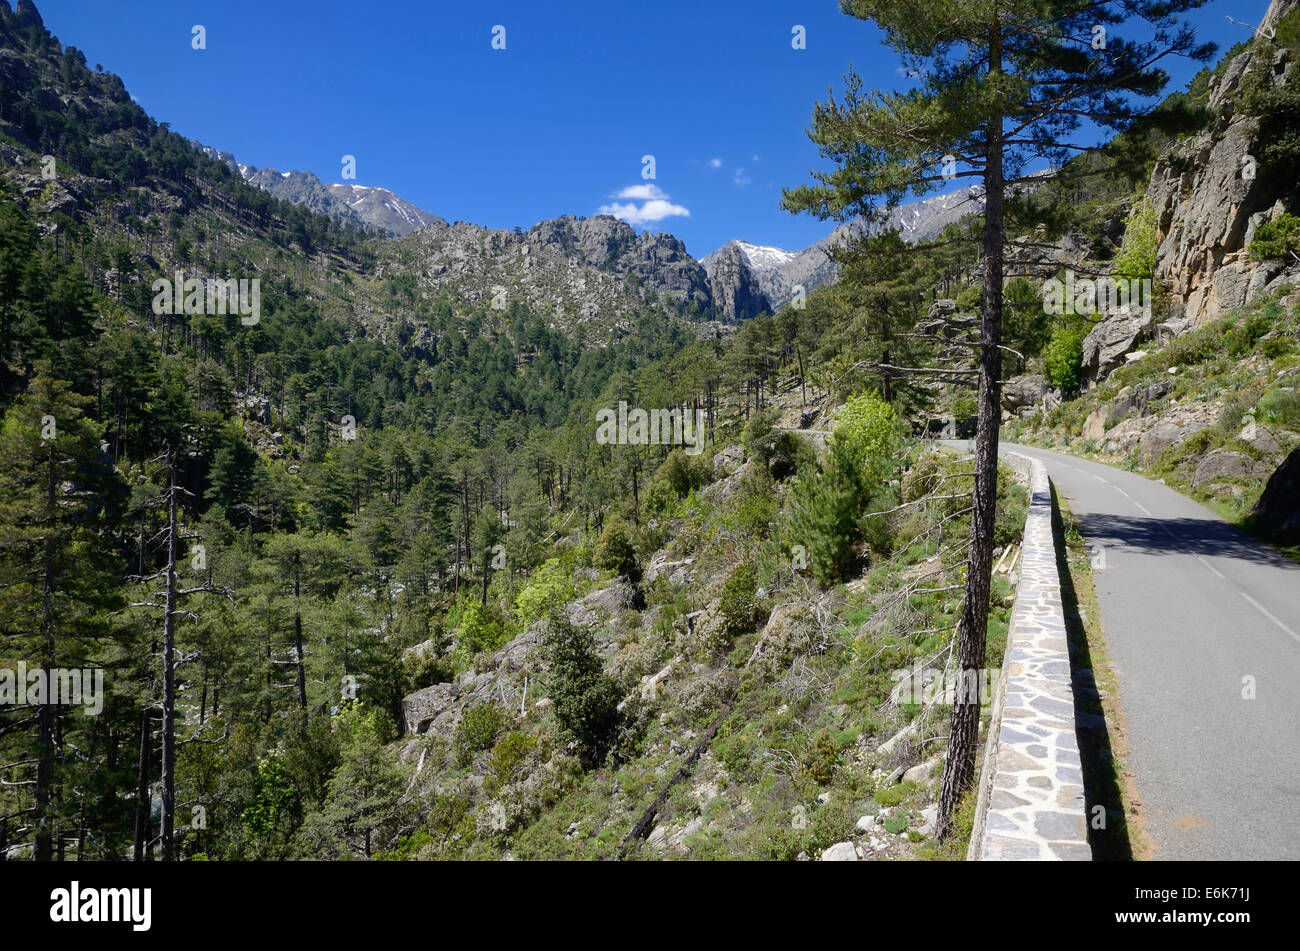 Narrow street in Restonica Valley, Gorges de la Restonica, Parc naturel régional de Corse, near Corte, Corsica, France Stock Photo